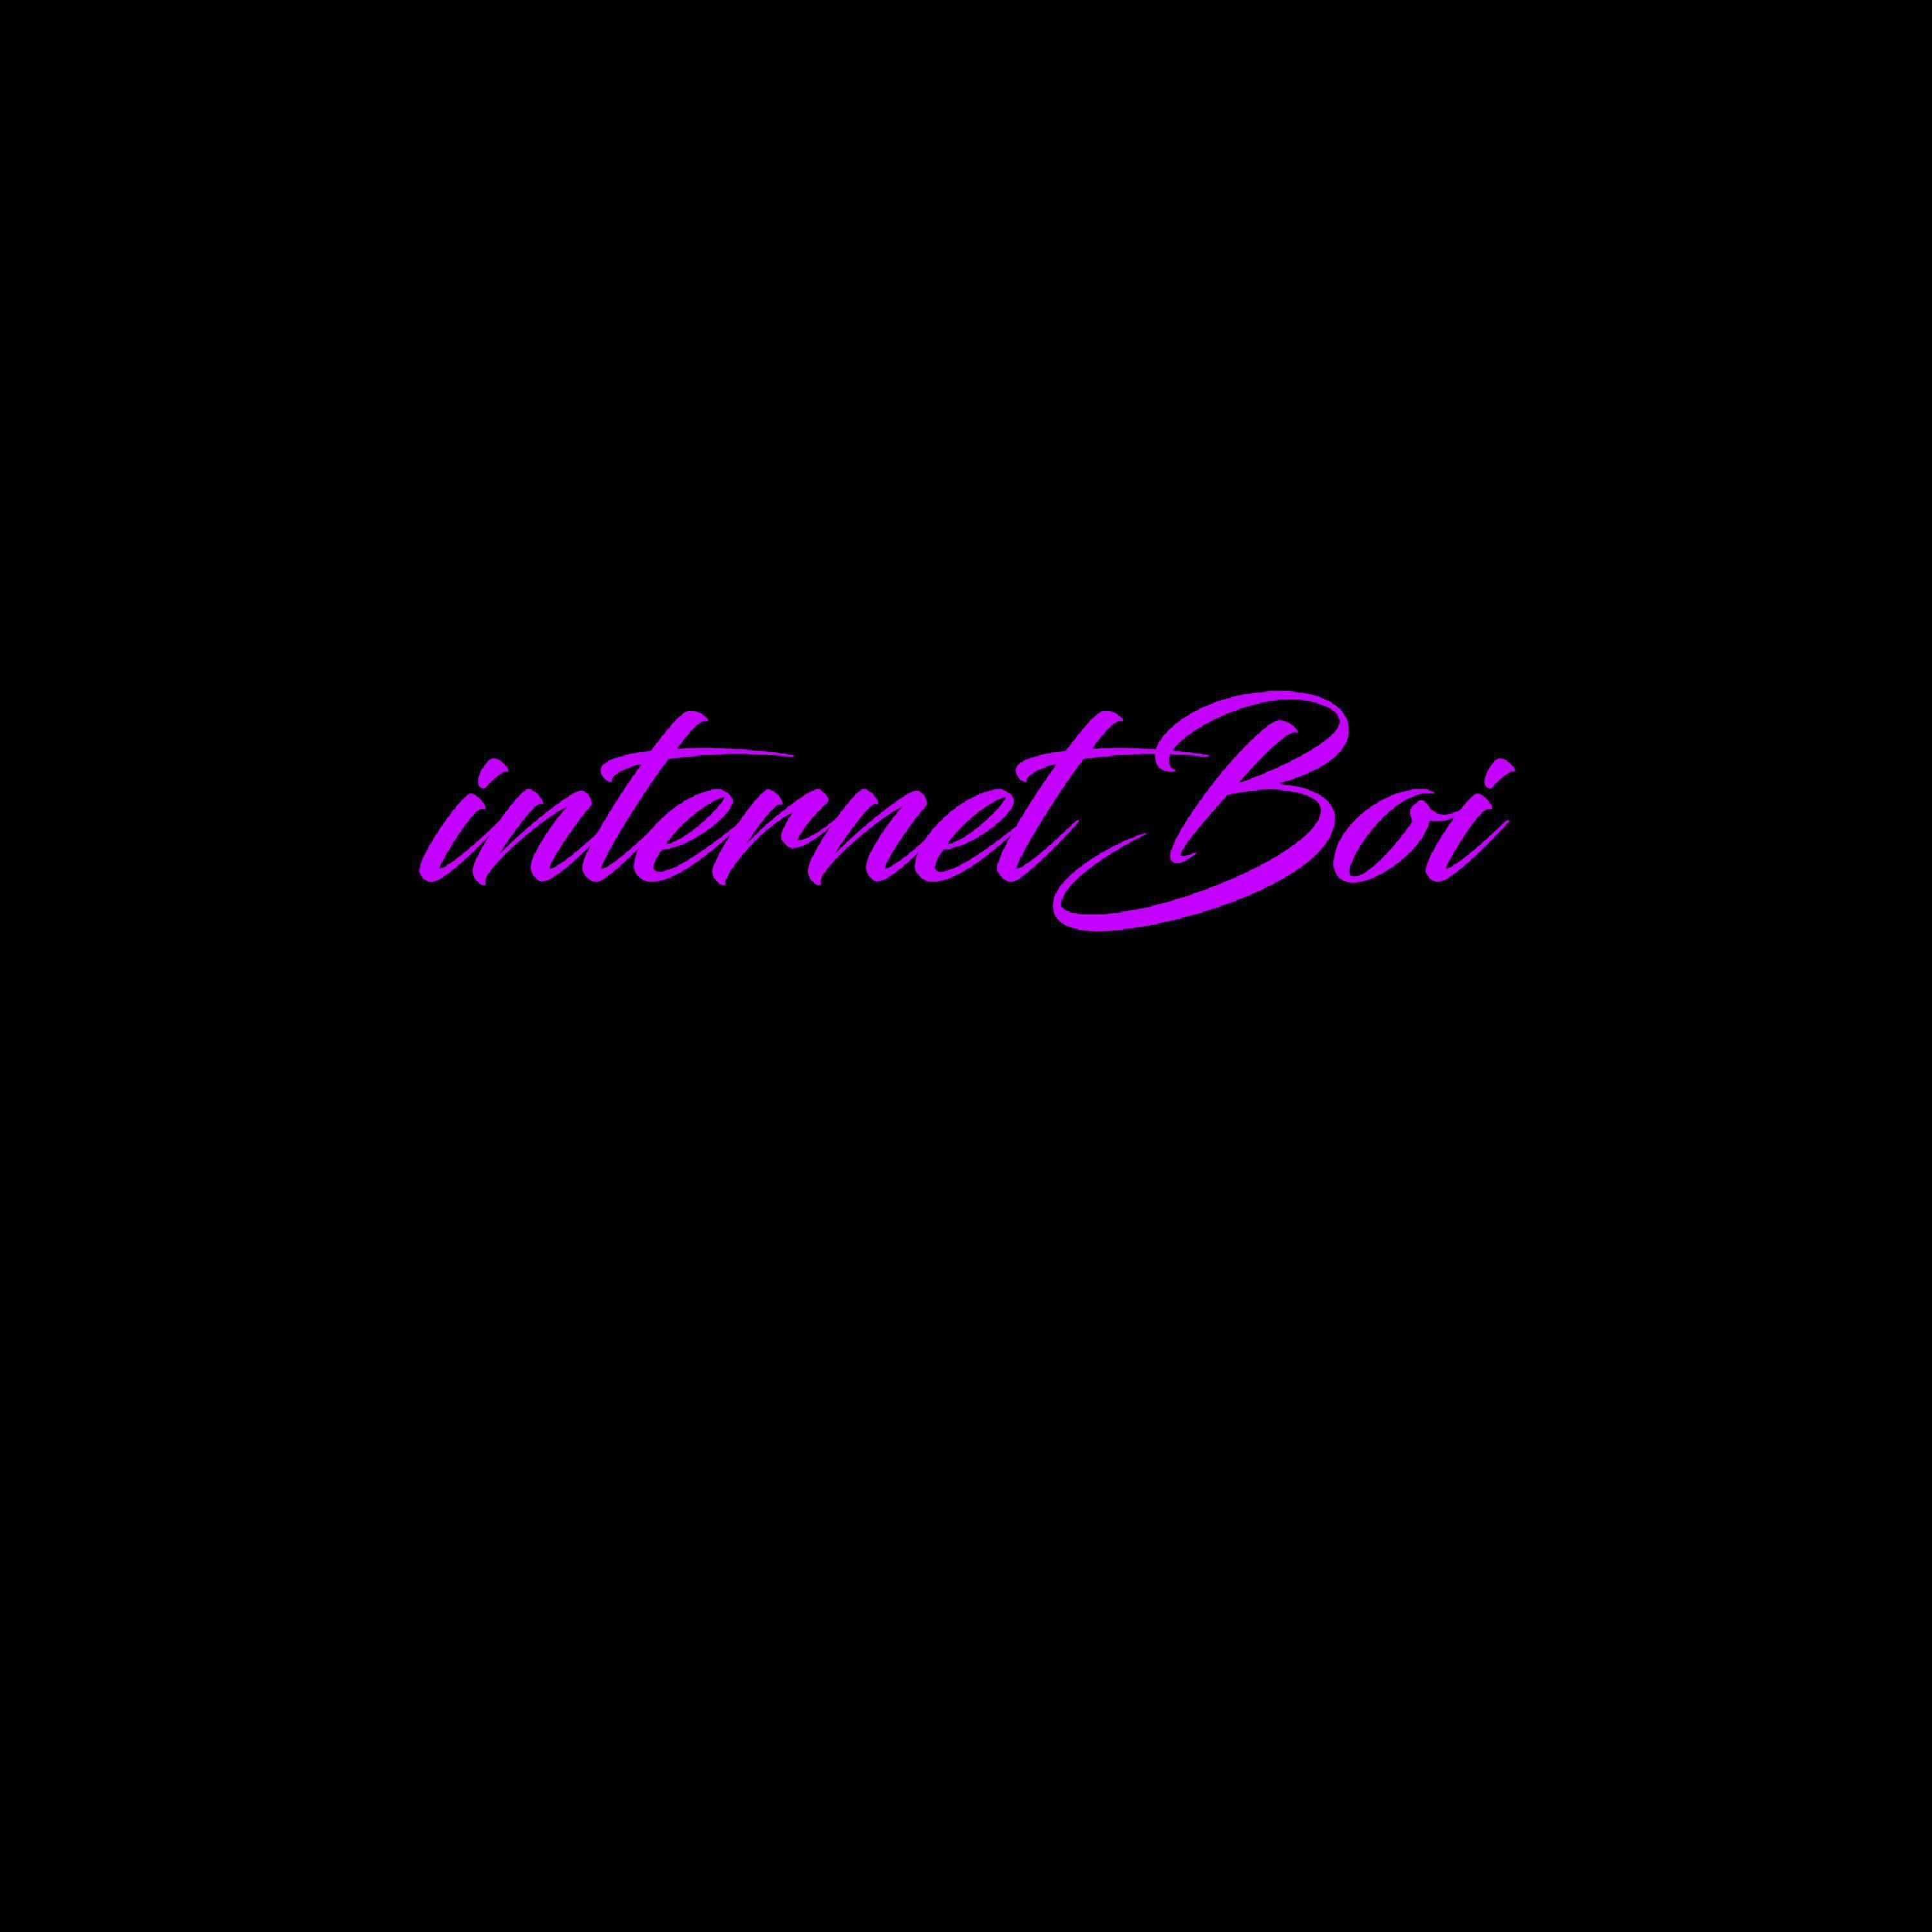 internetBoi - Winter :(